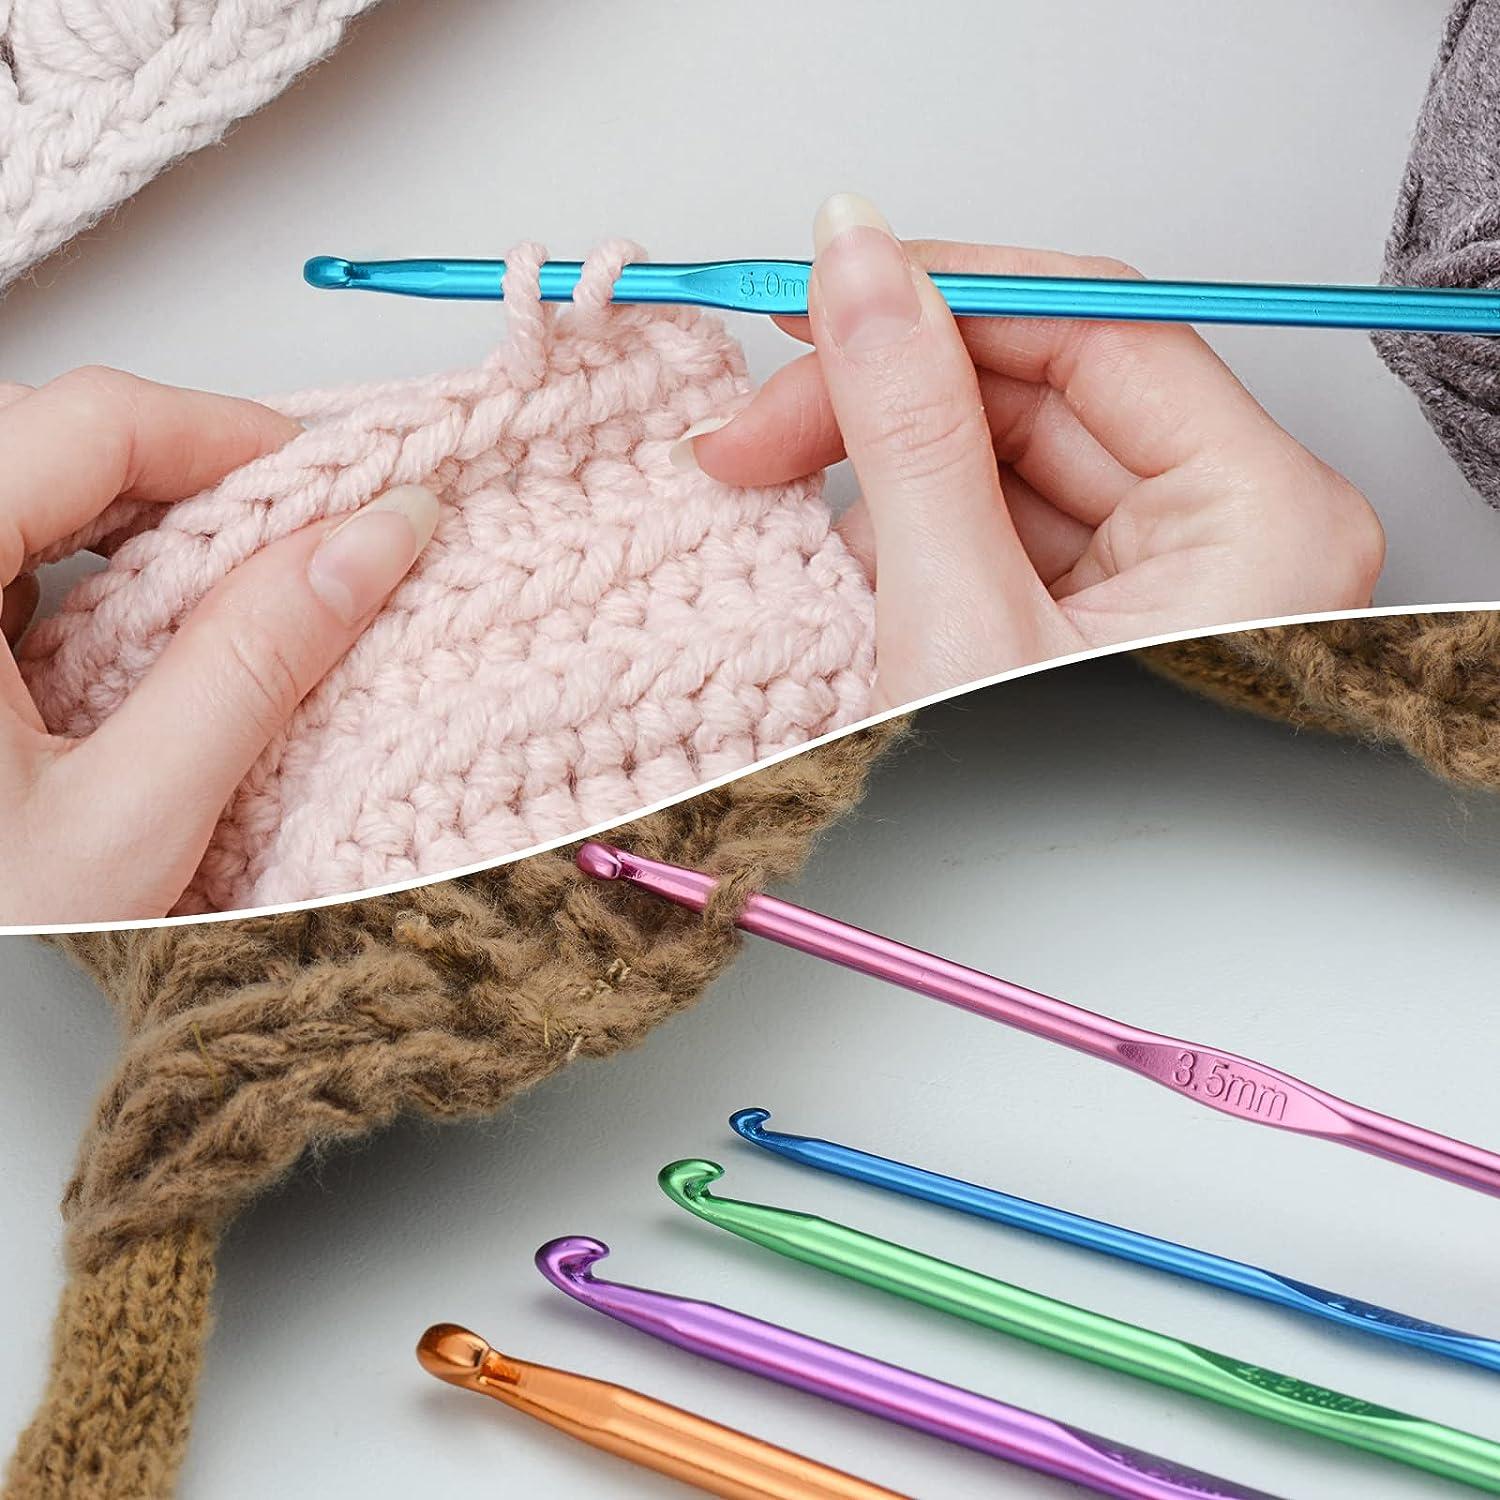 Dahuyoo Crochet Hooks Set Home Crochet Hook Kit, 110 Piece Knitting &  Crochet Supplies DIY Kits, Including Sewing Needles, for Crochet Needle for  Beginners, and Seasoned Crochet Lovers